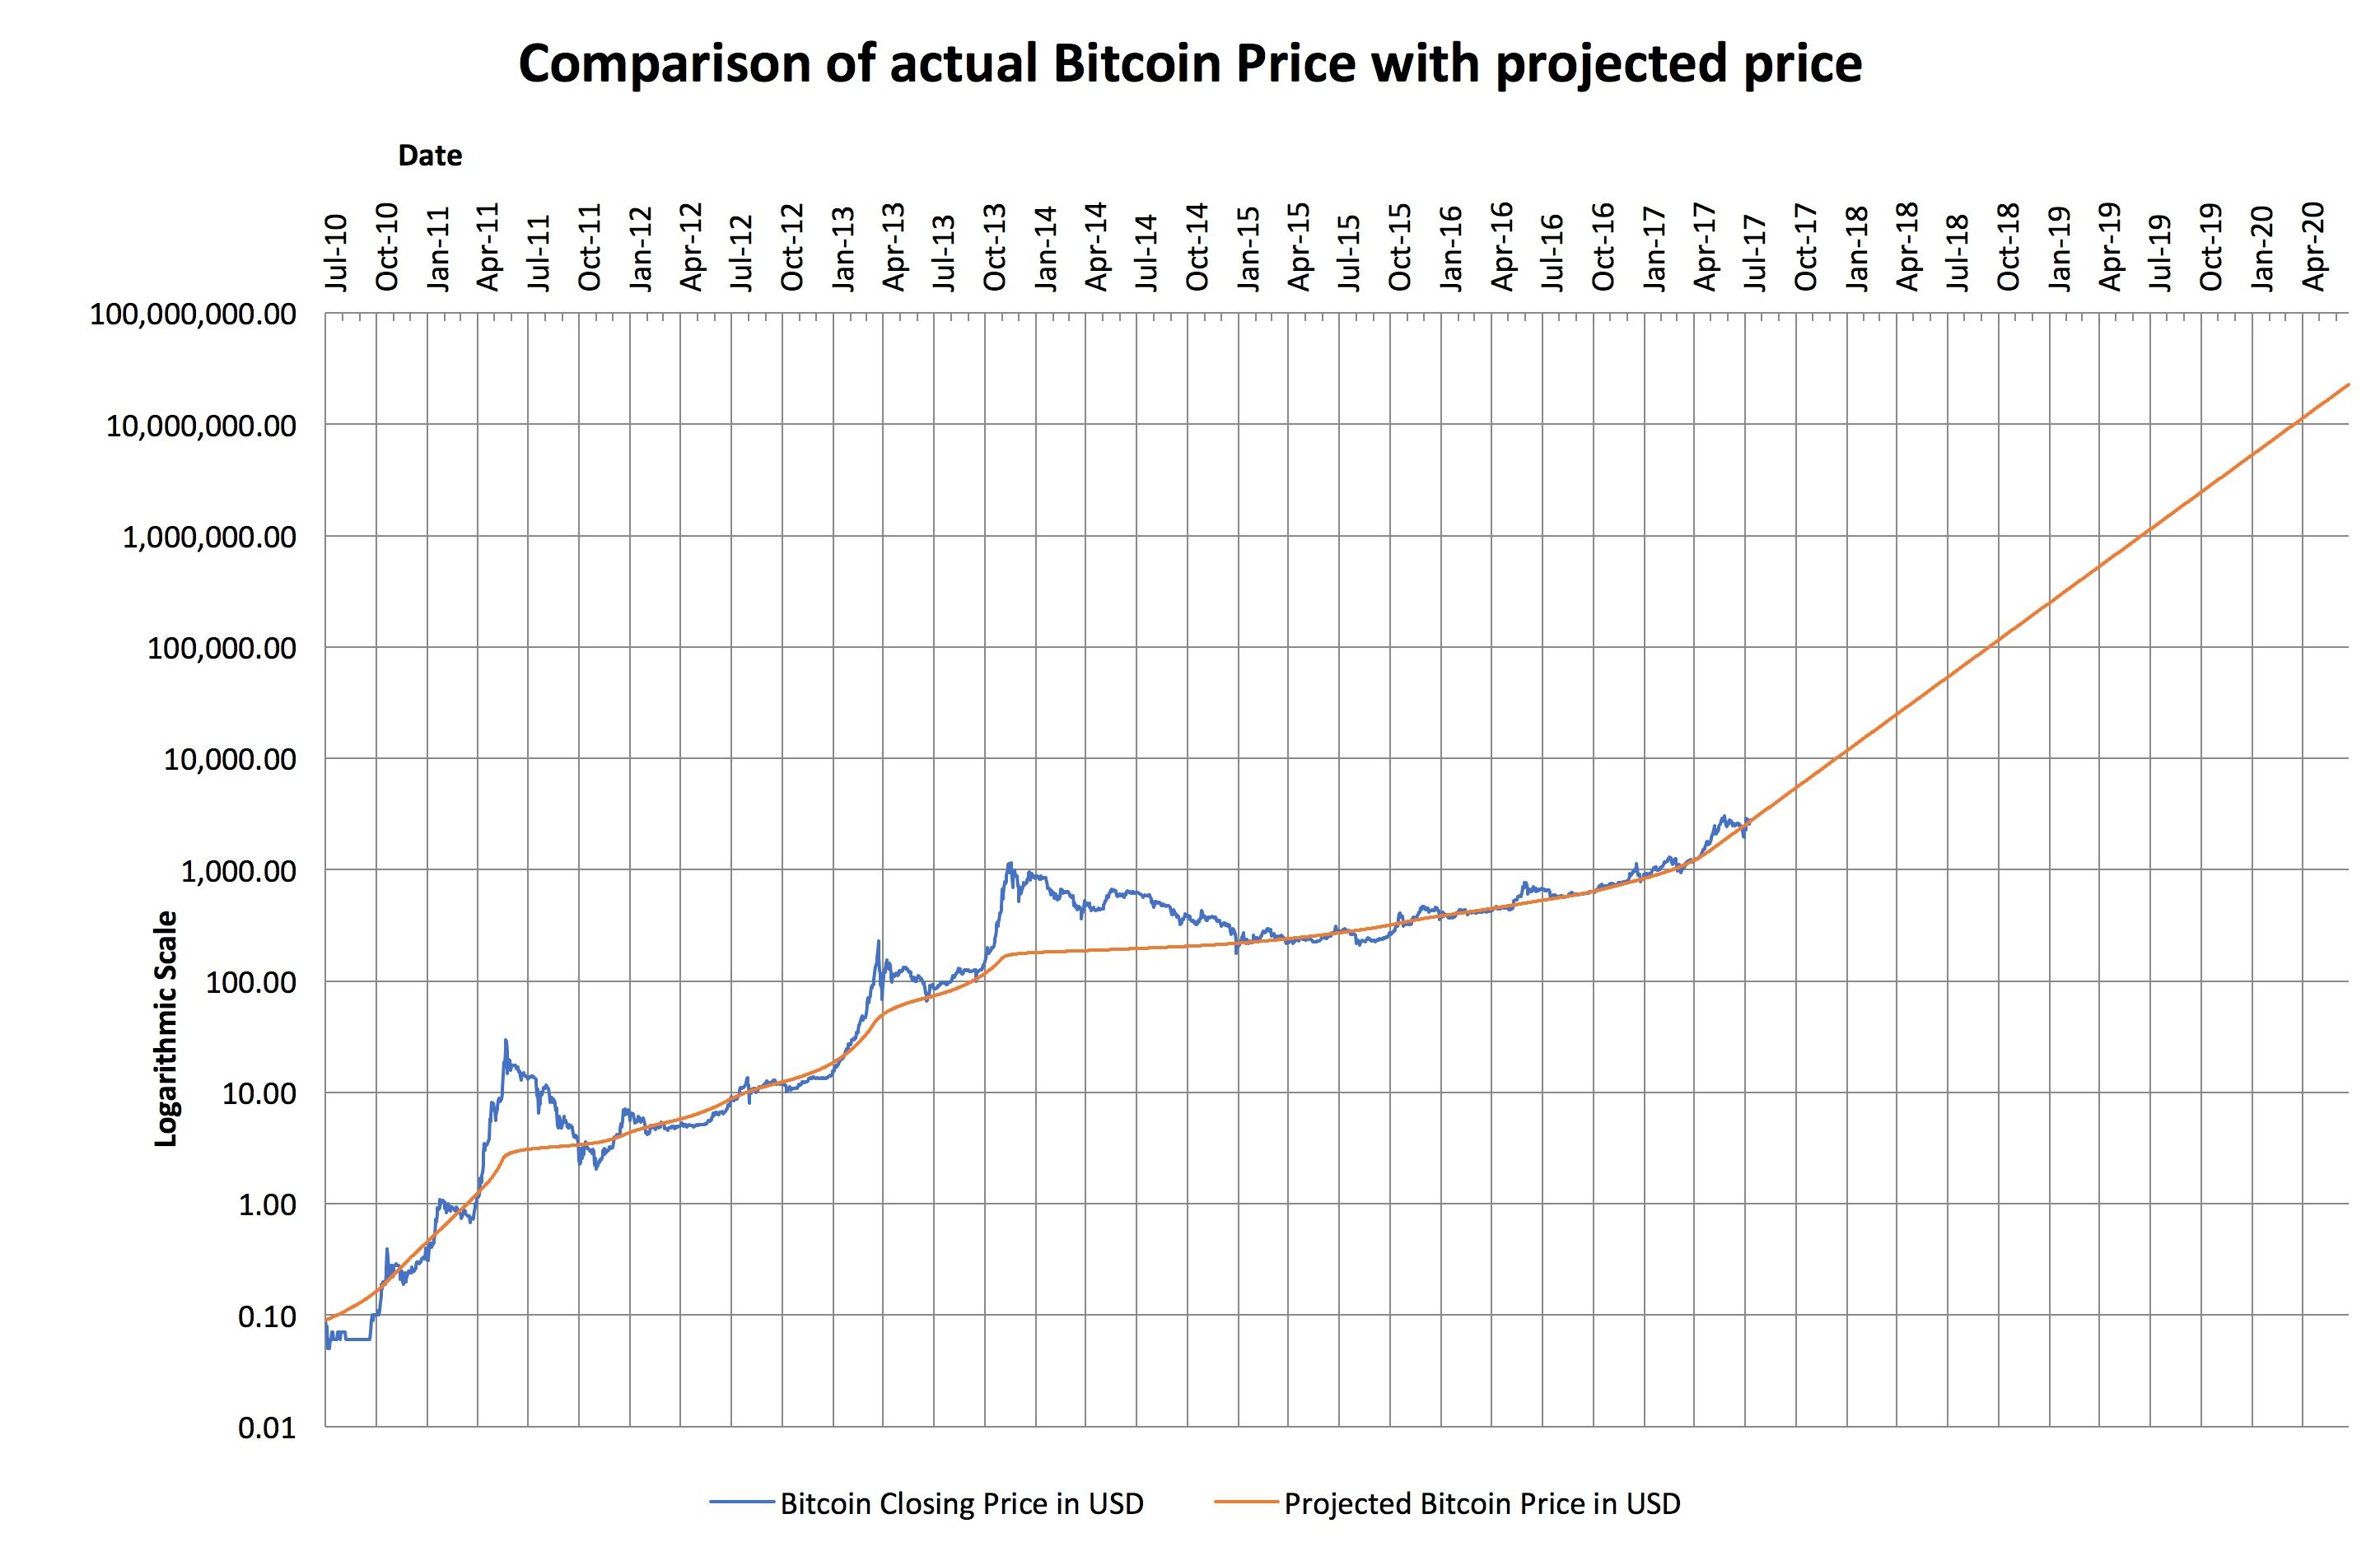  Bitcoin Long Term Price Projection Aug 2017 onwards.jpg